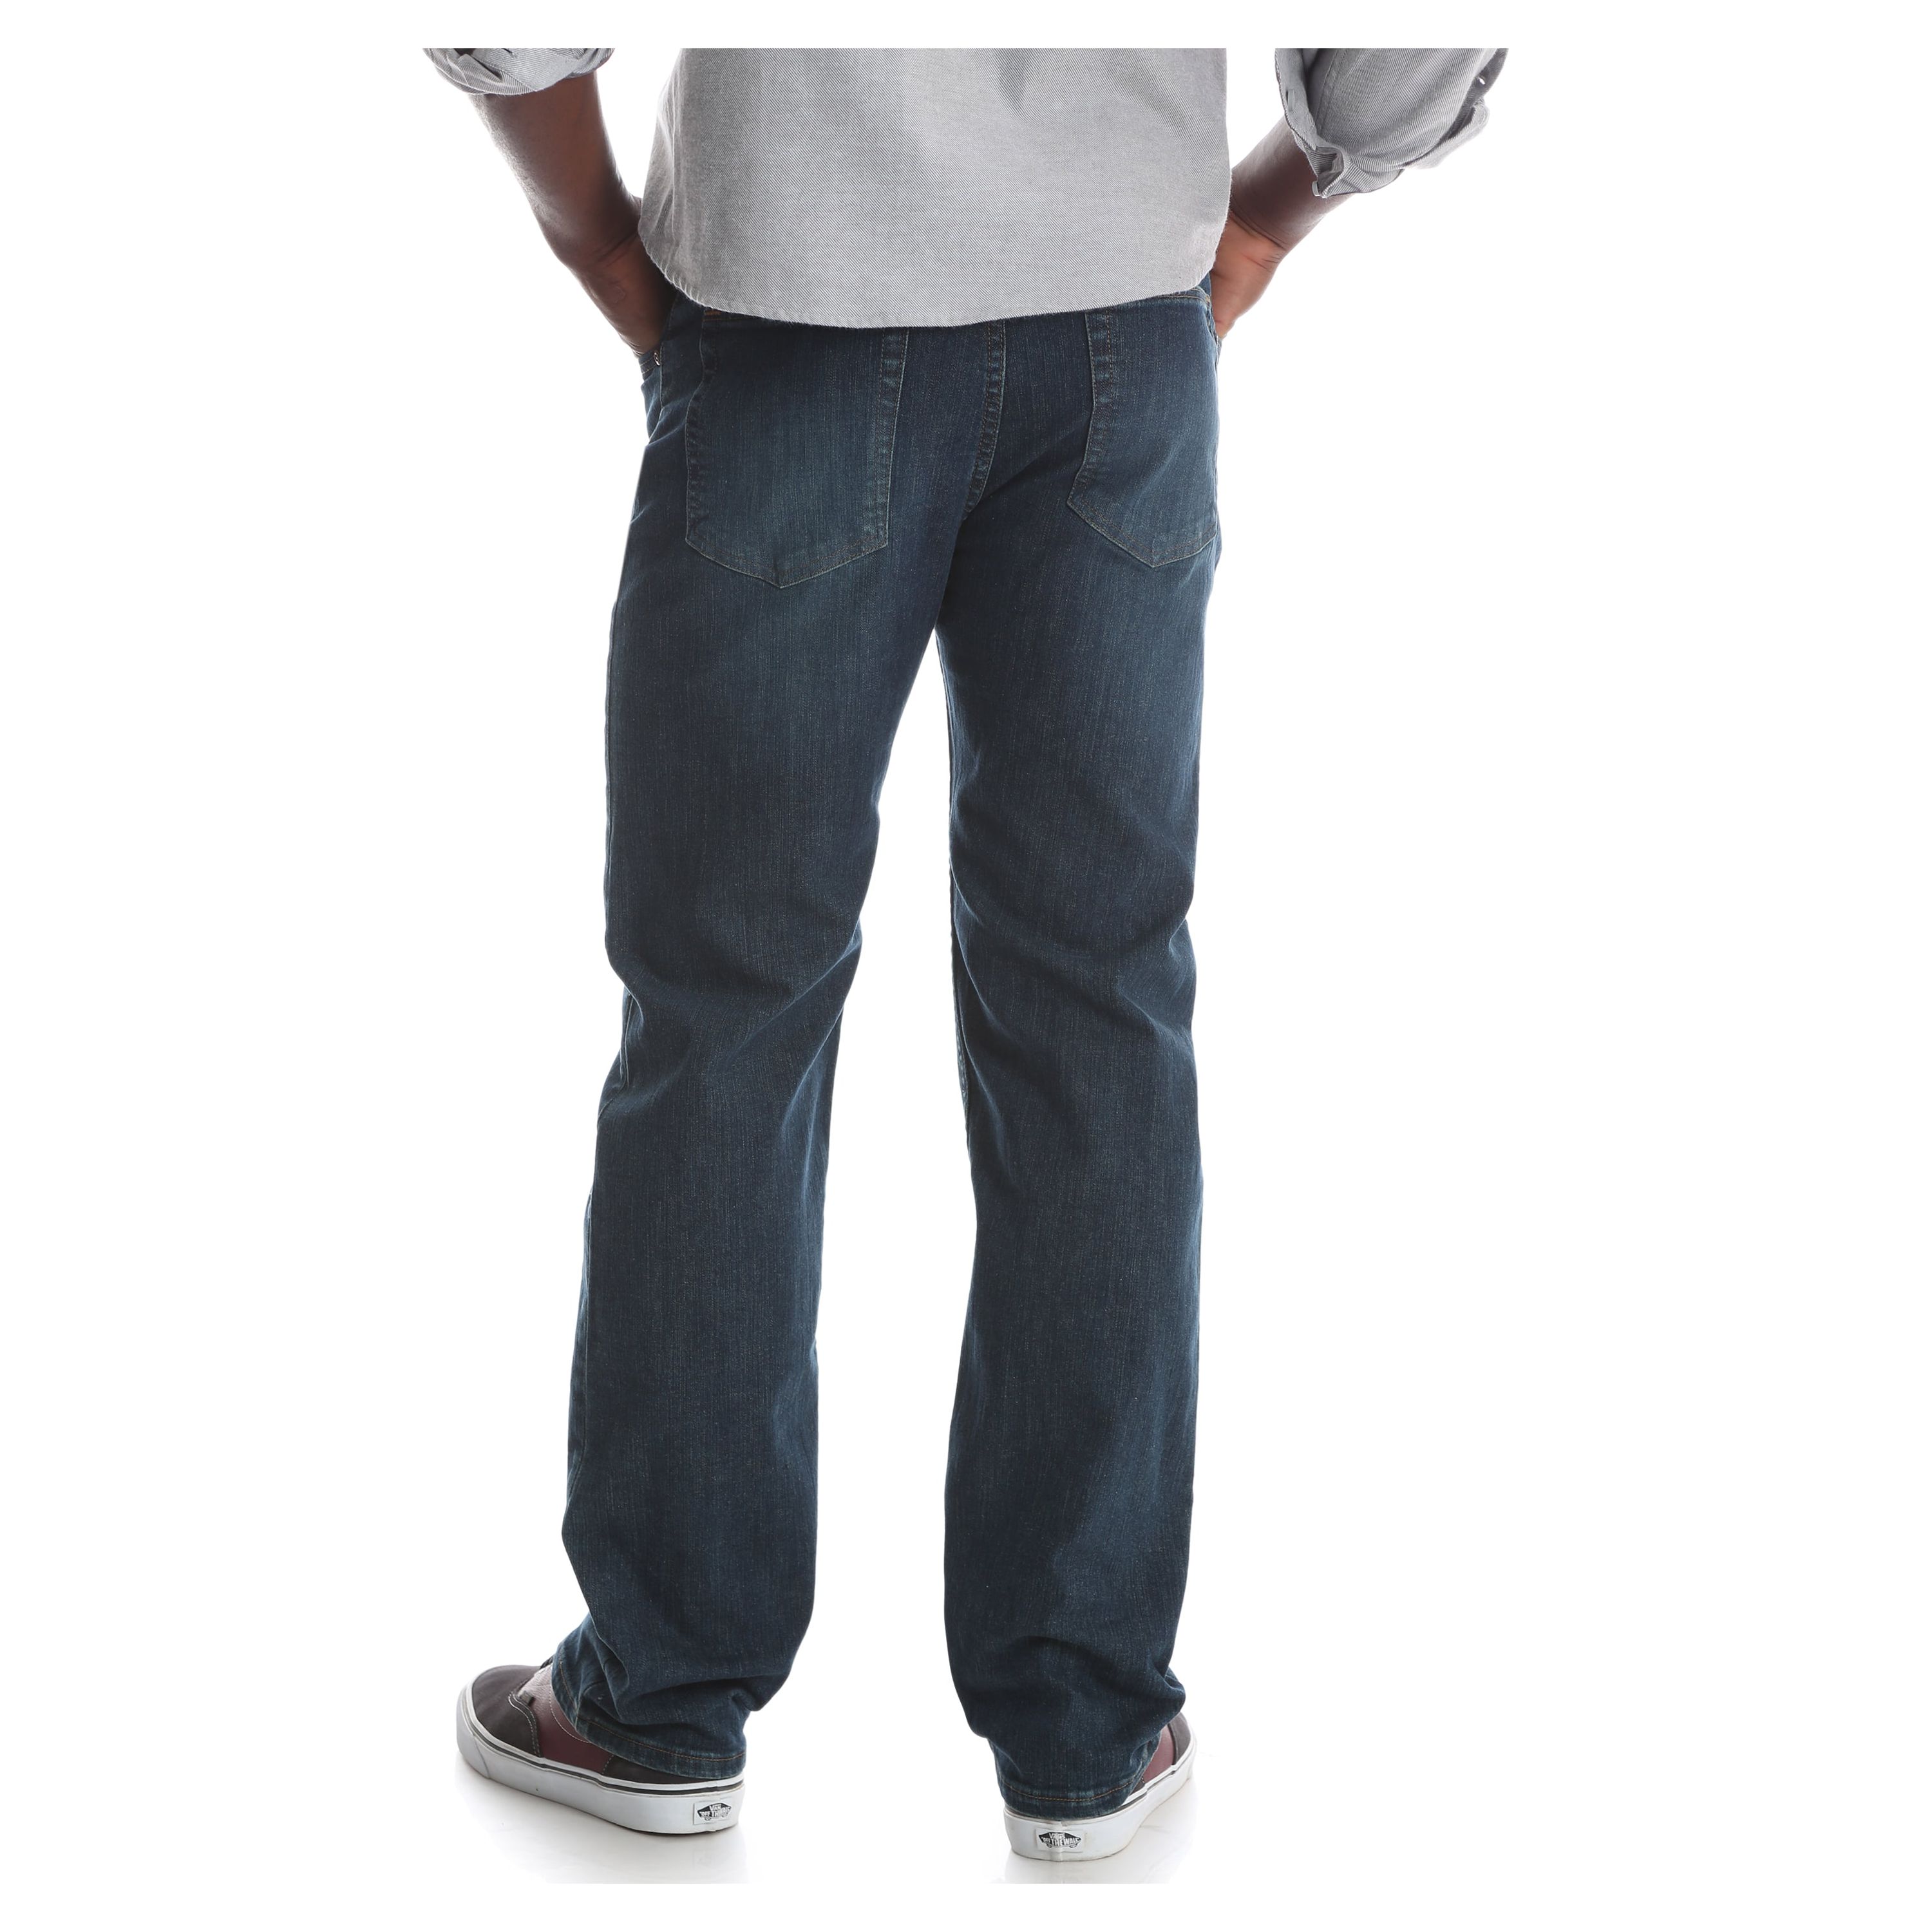 Wrangler Men's and Big Men's Regular Fit Jeans with Flex - image 1 of 7